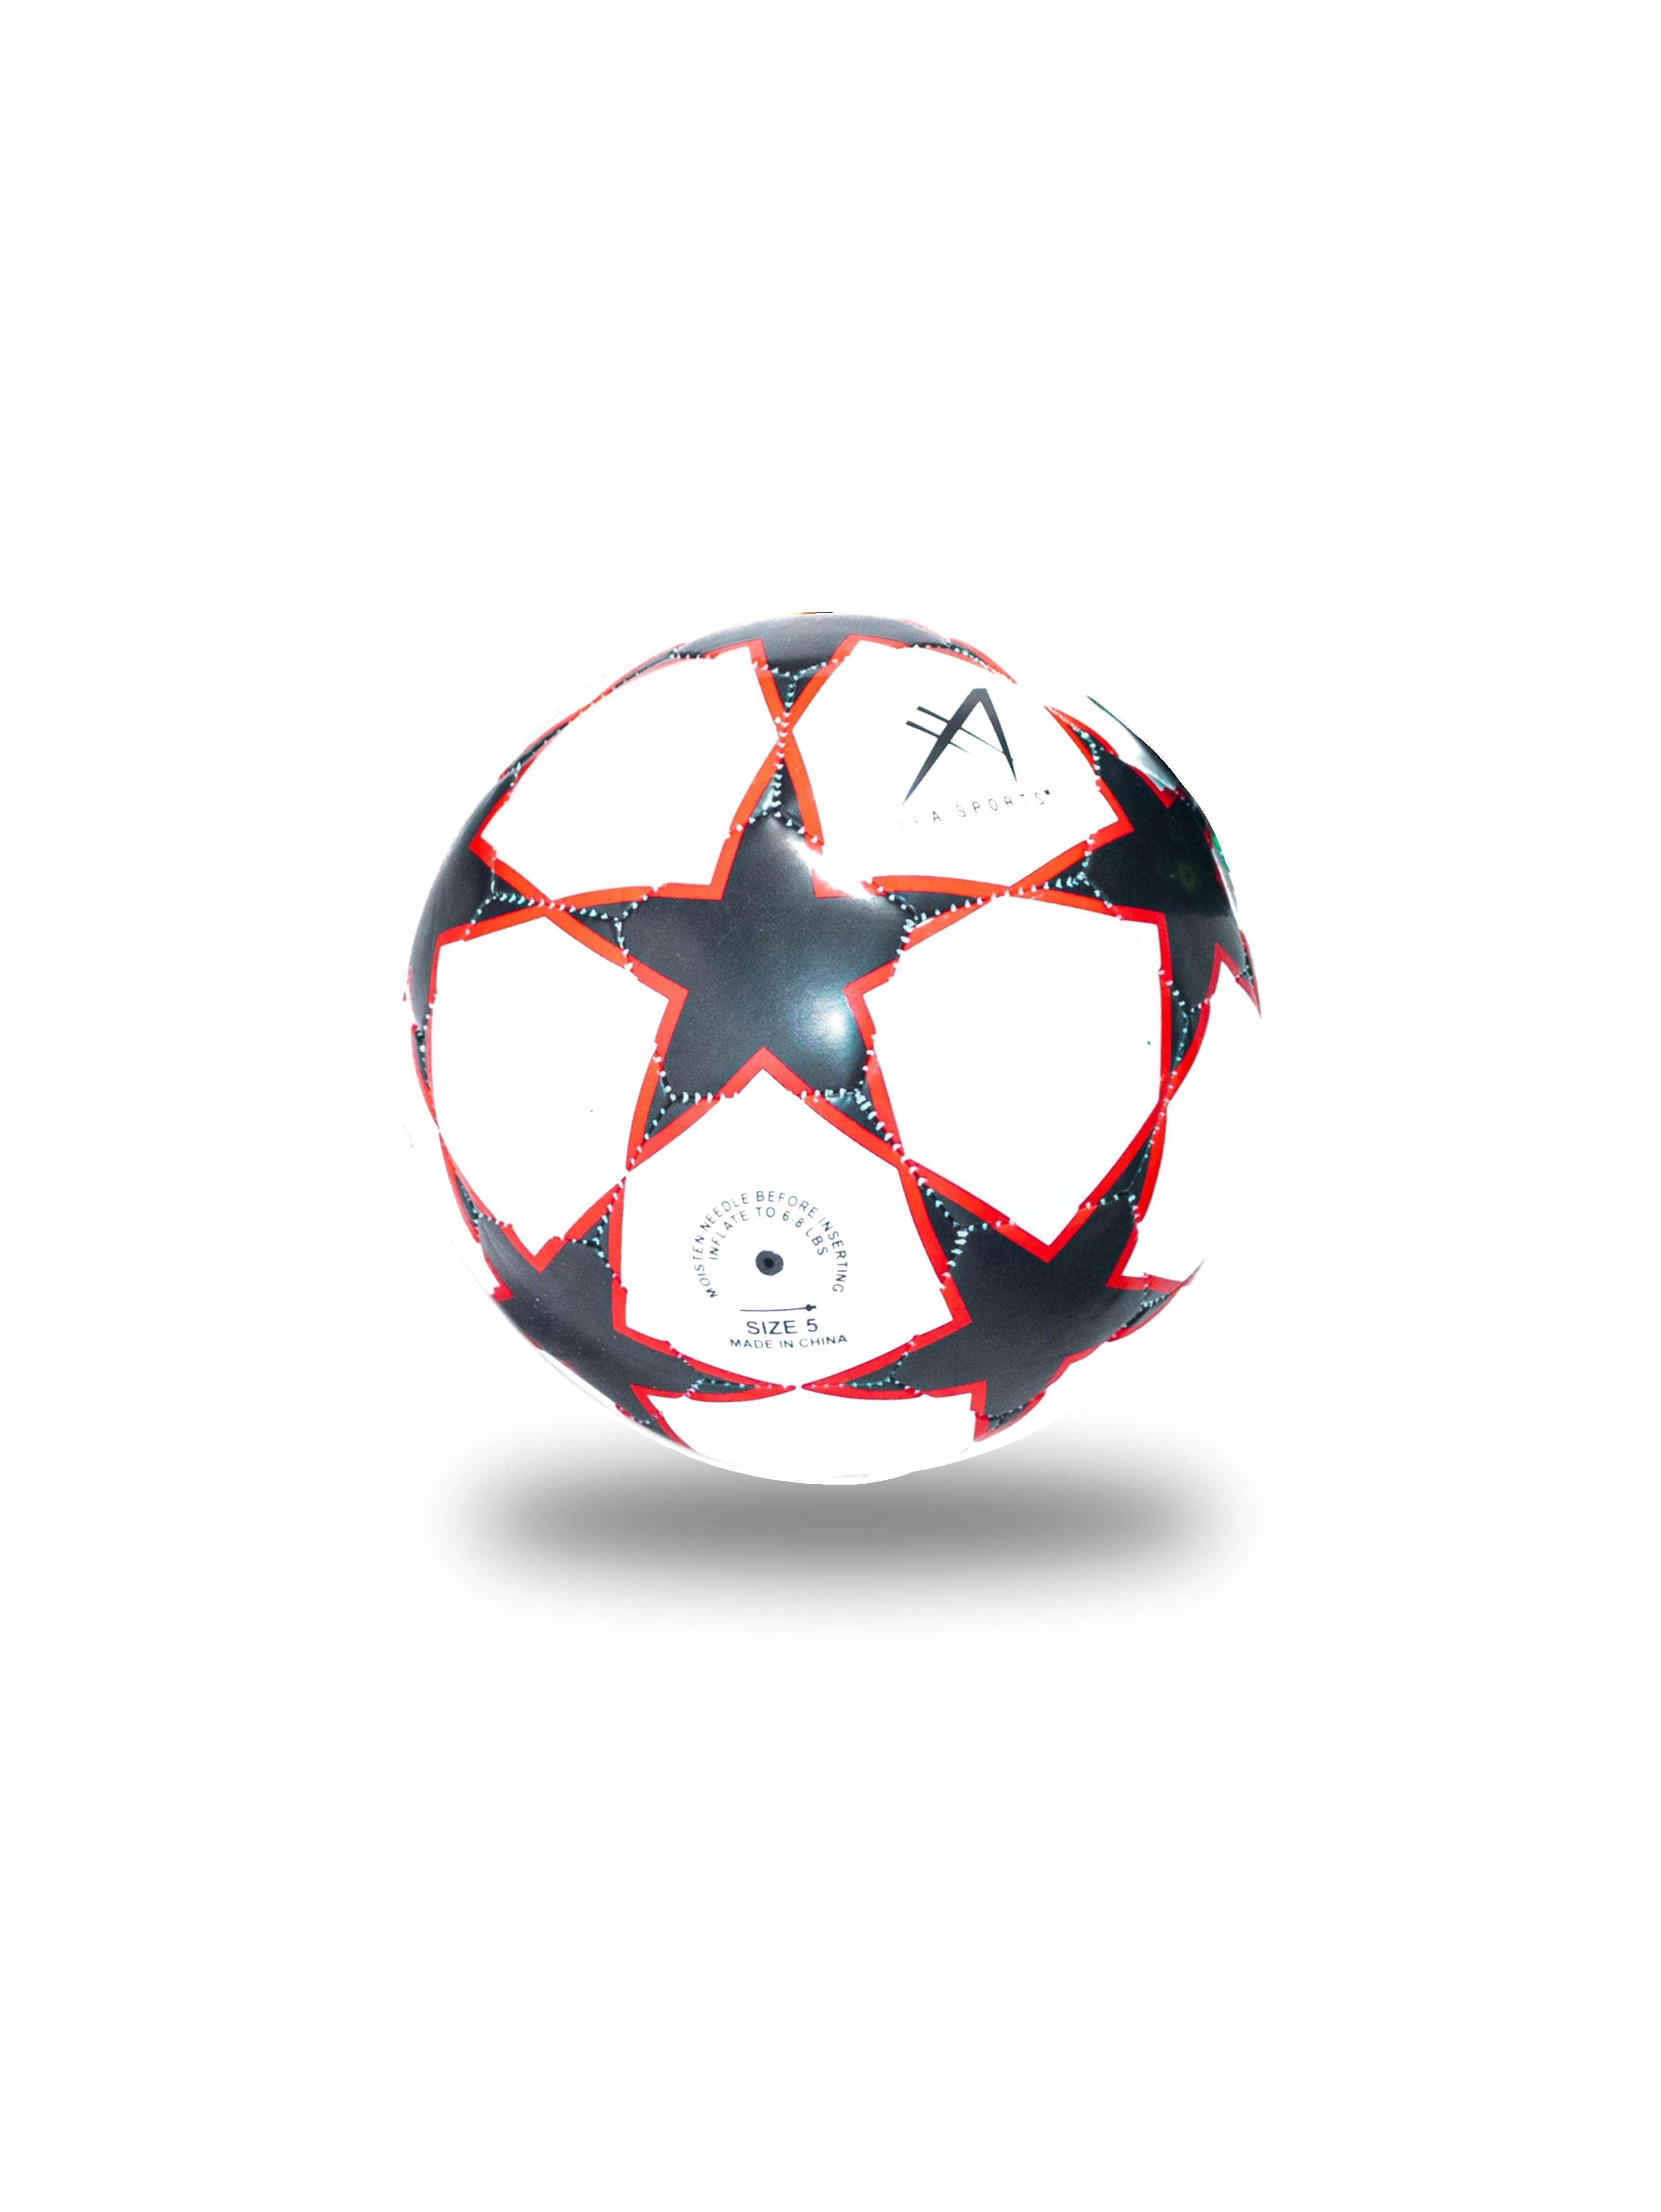 The Galaxy Soccer Ball